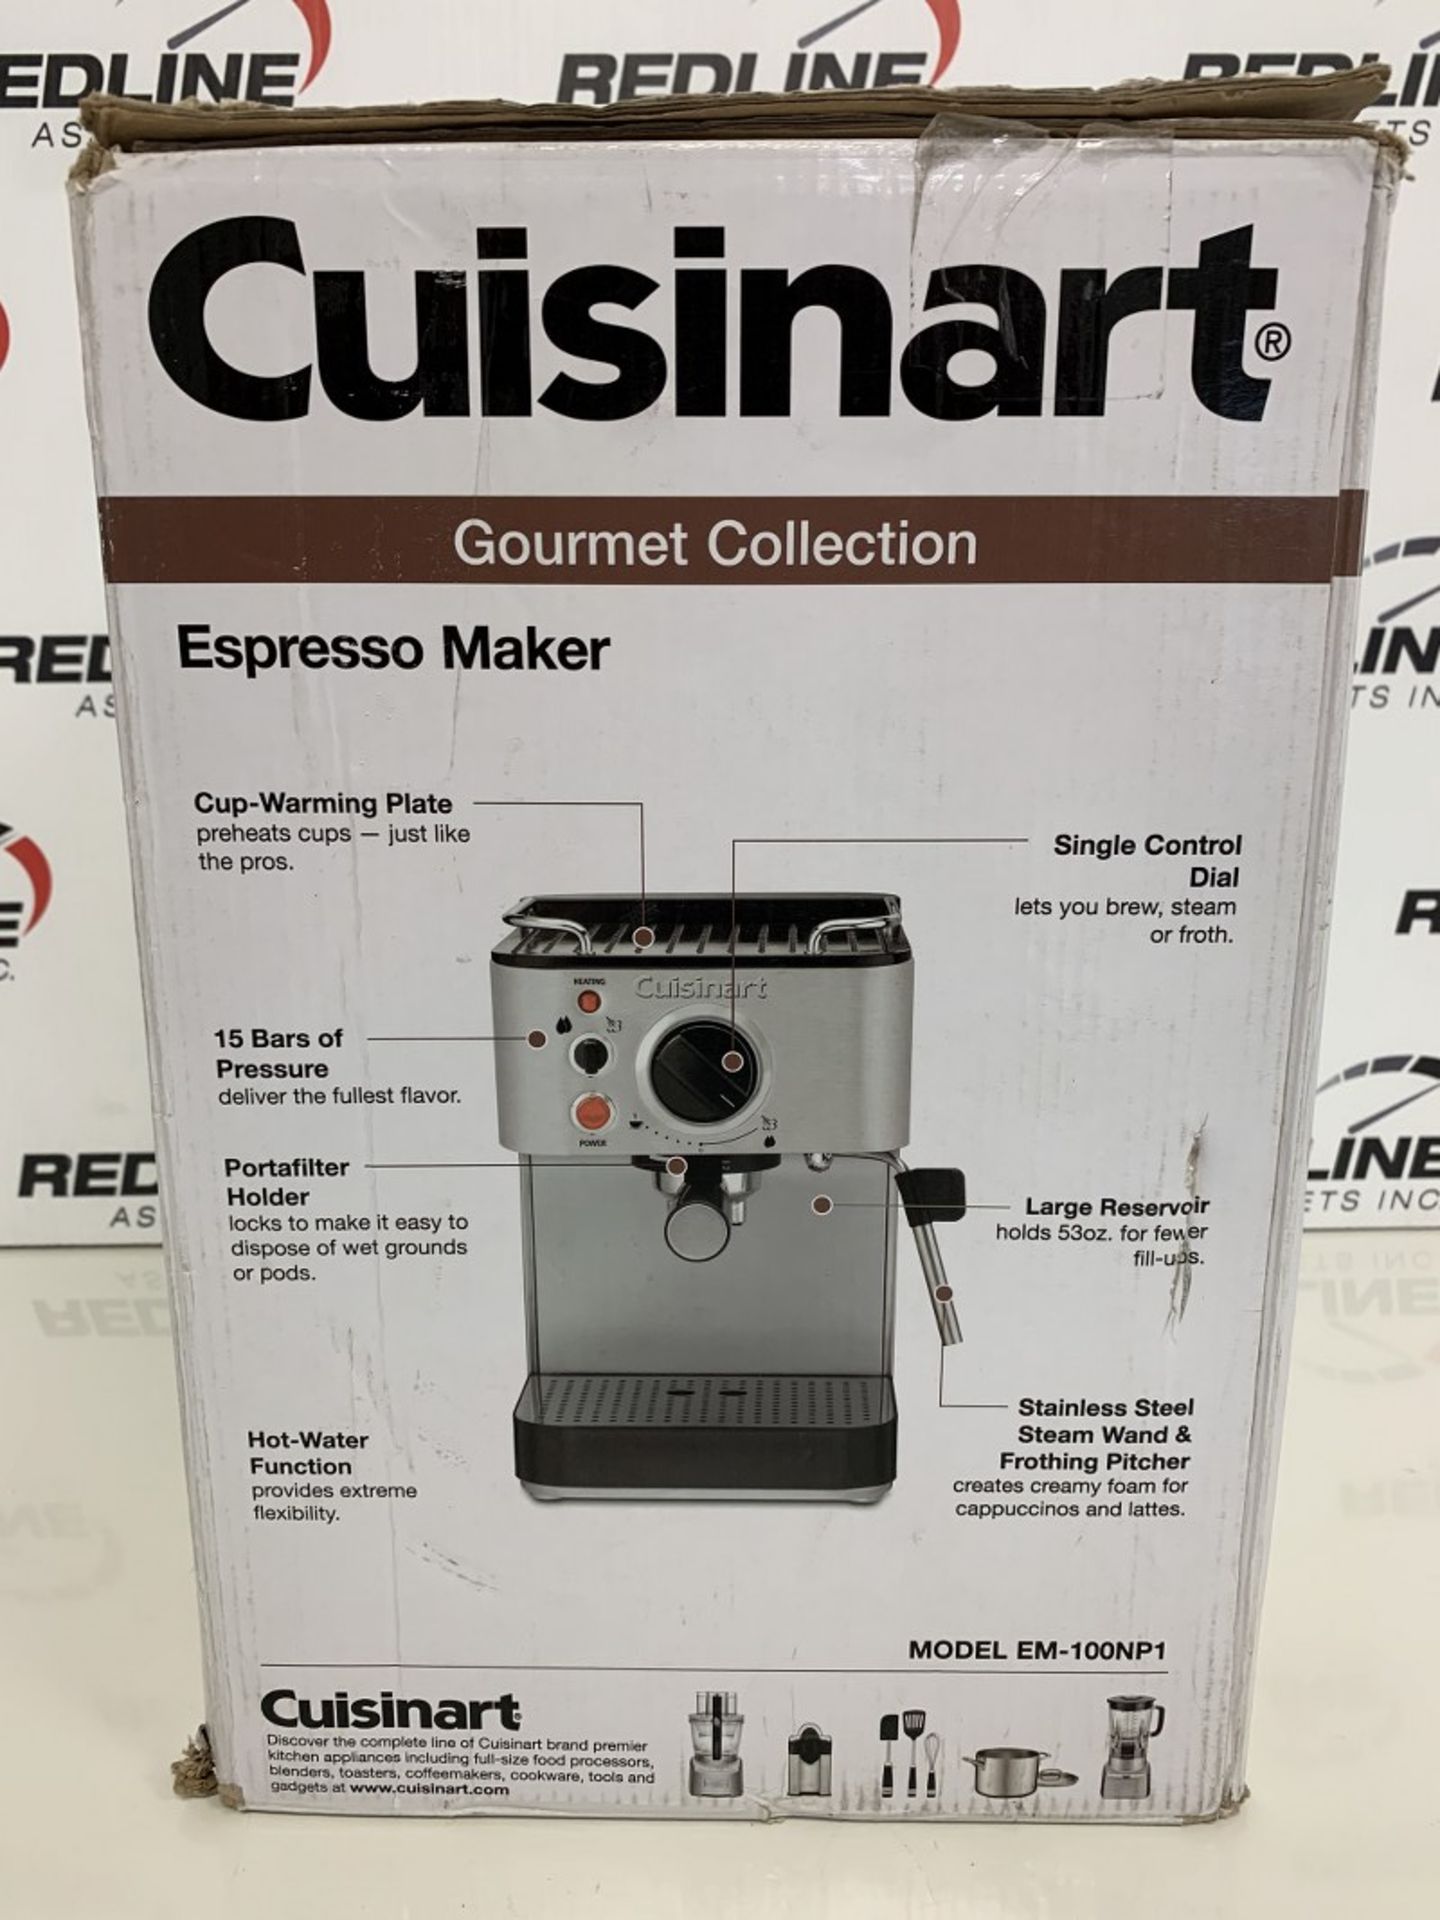 Cuisinart - Espresso Maker - Image 2 of 2